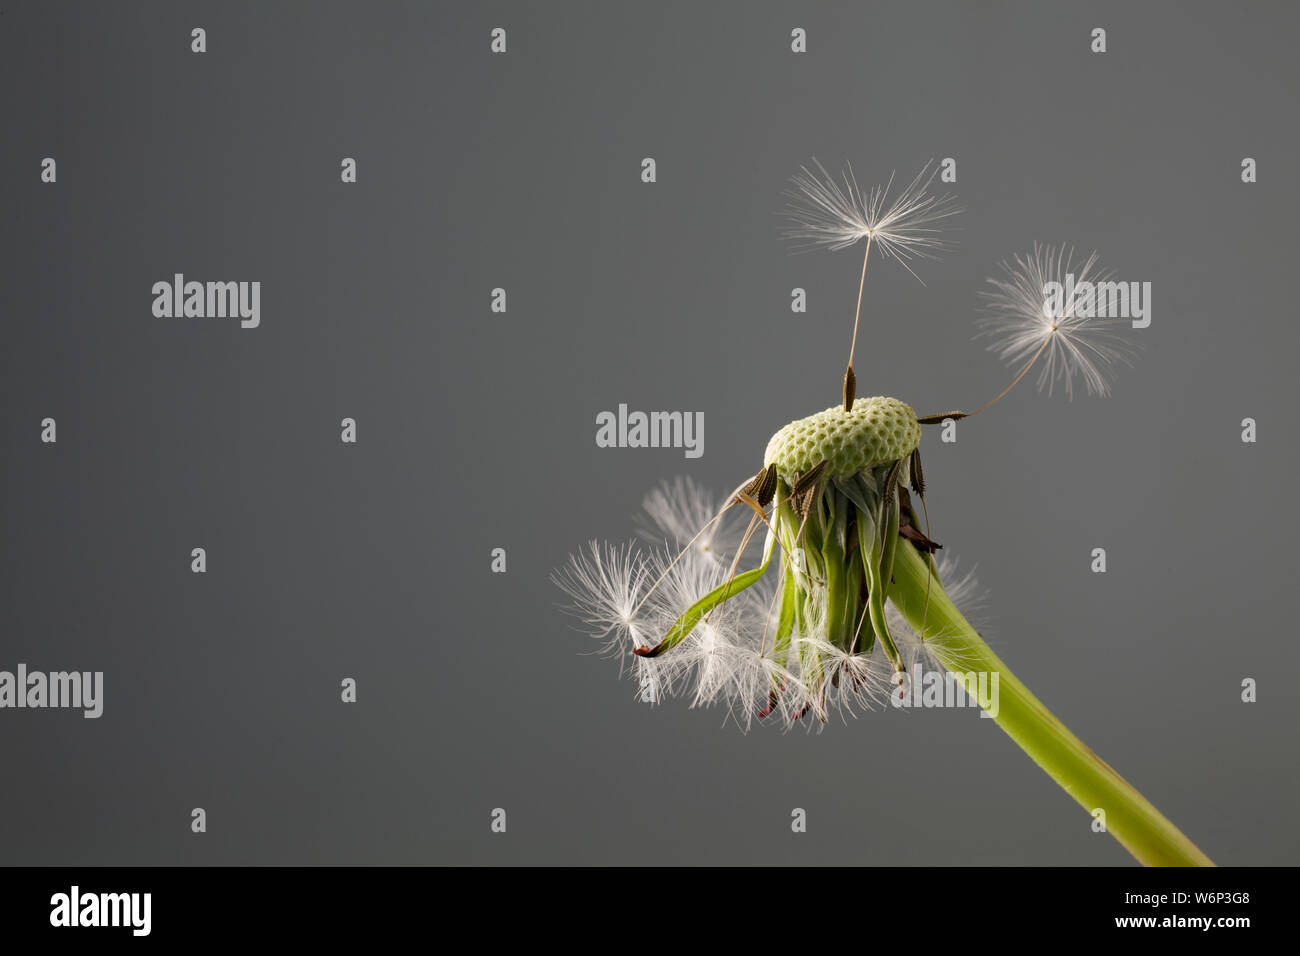 Dandelion seed heads in studio Stock Photo